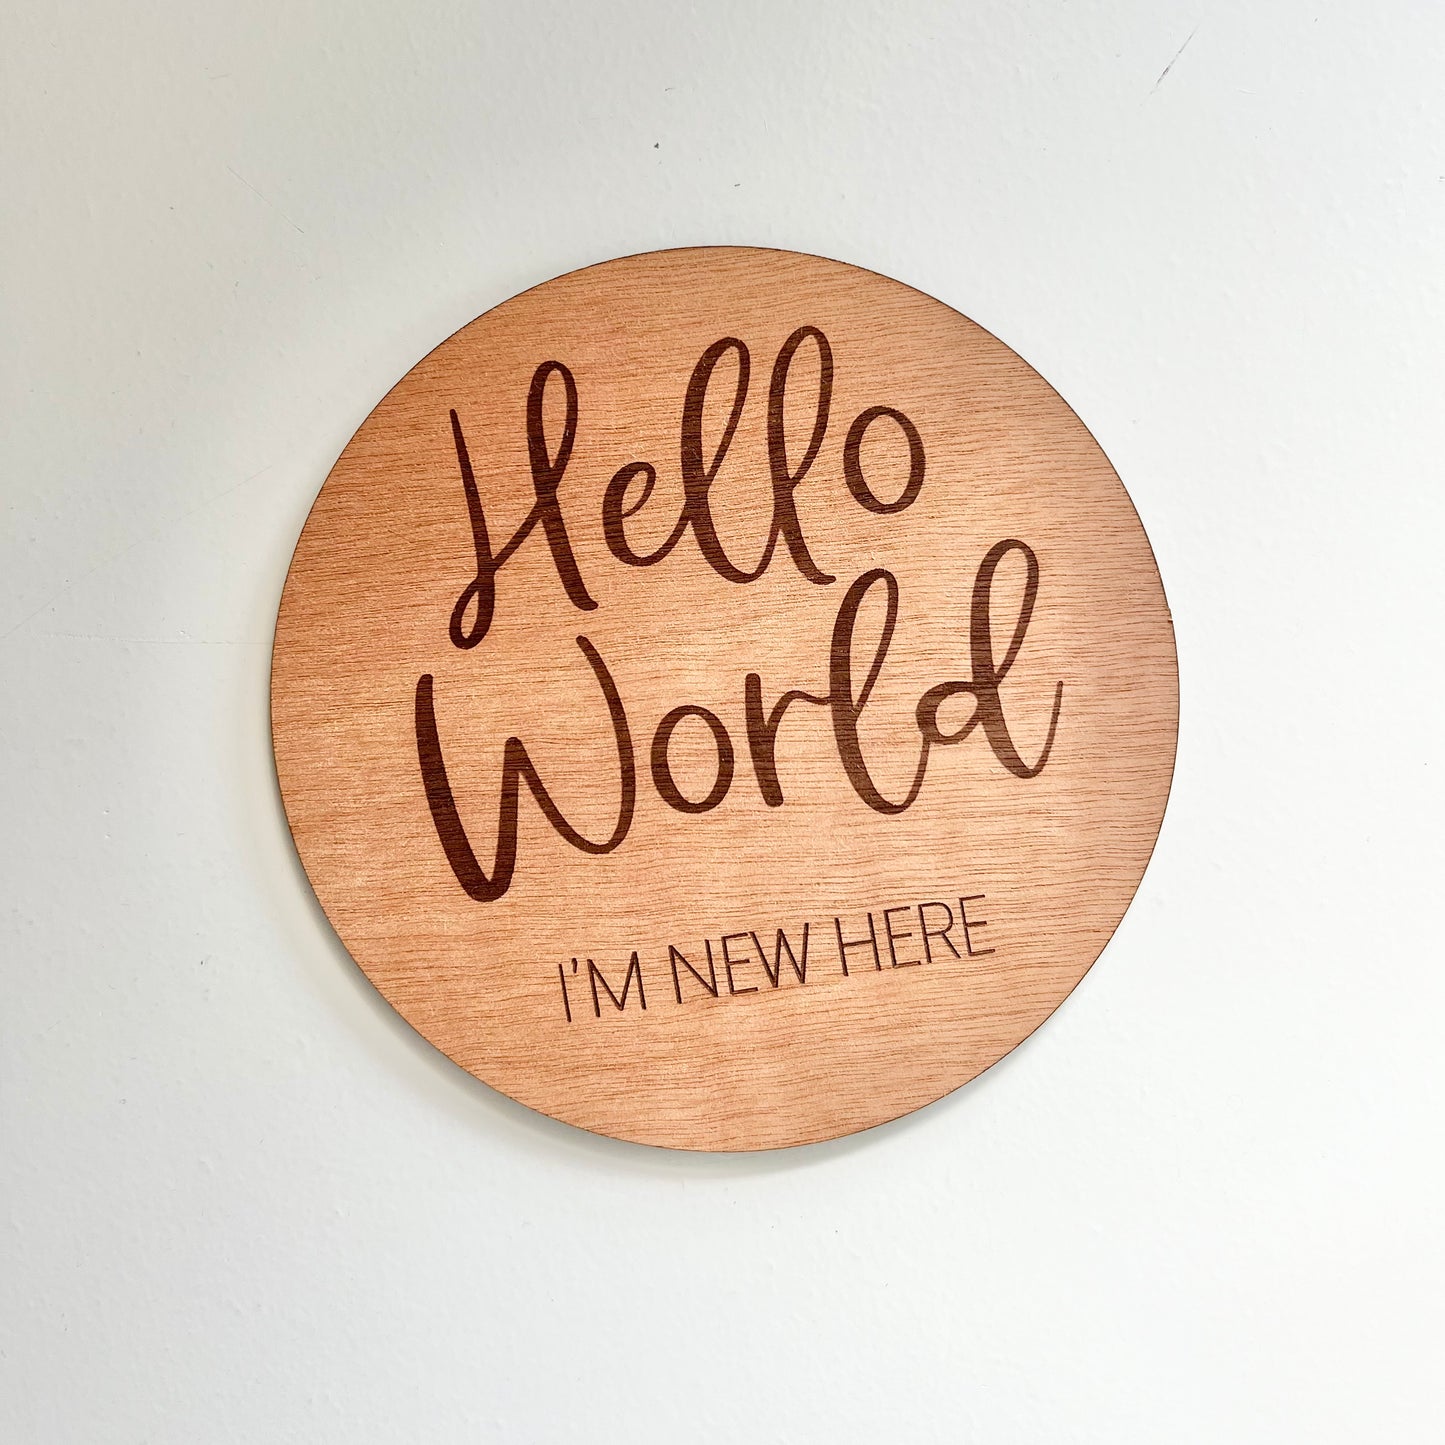 Hello world plaque - engraved